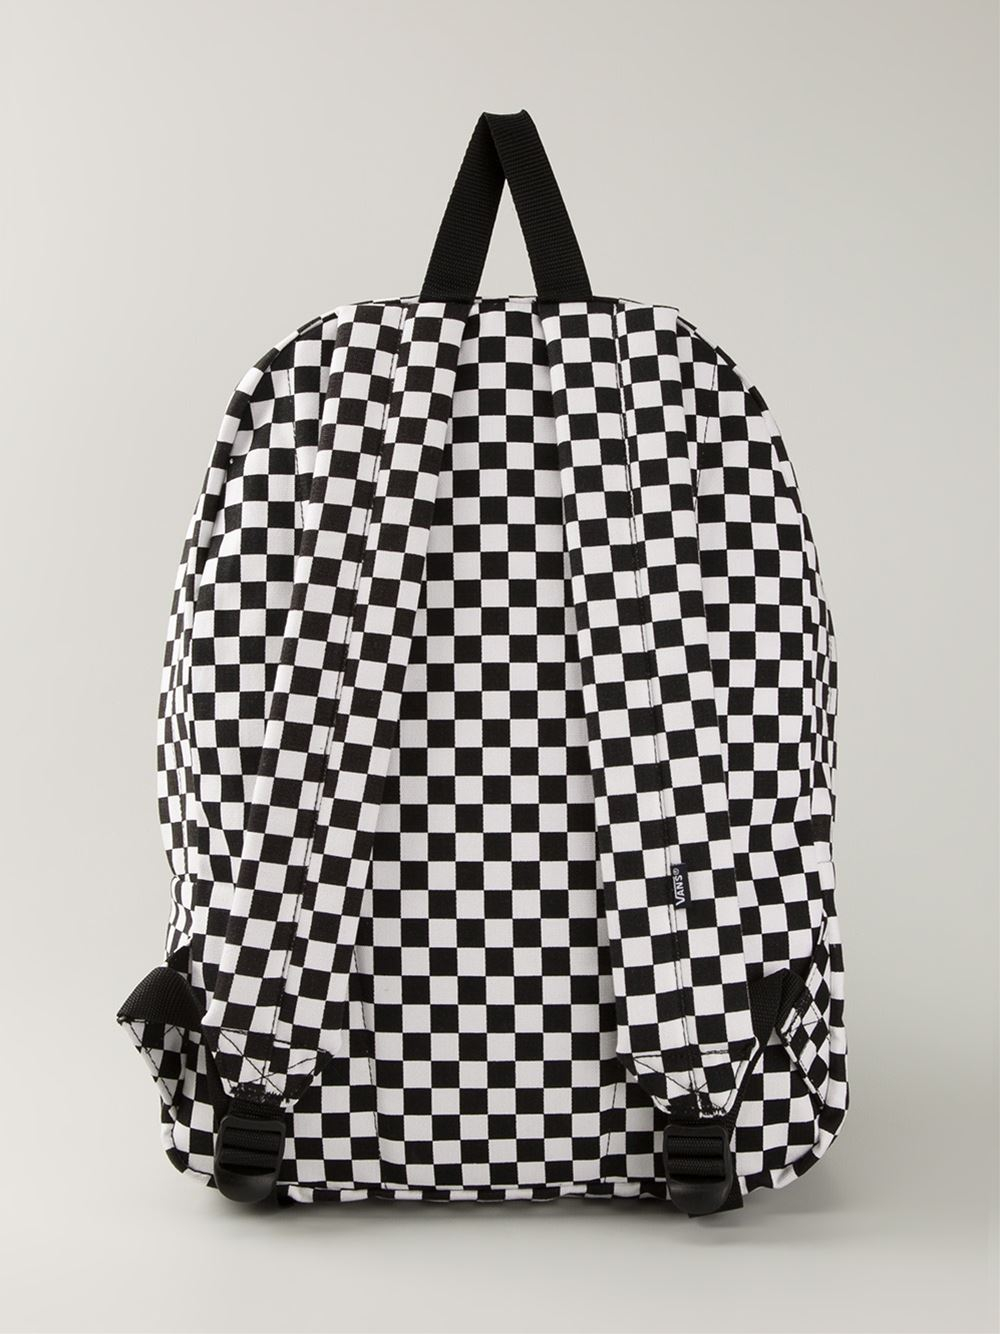 Vans Checkered Backpack in Black for Men | Lyst